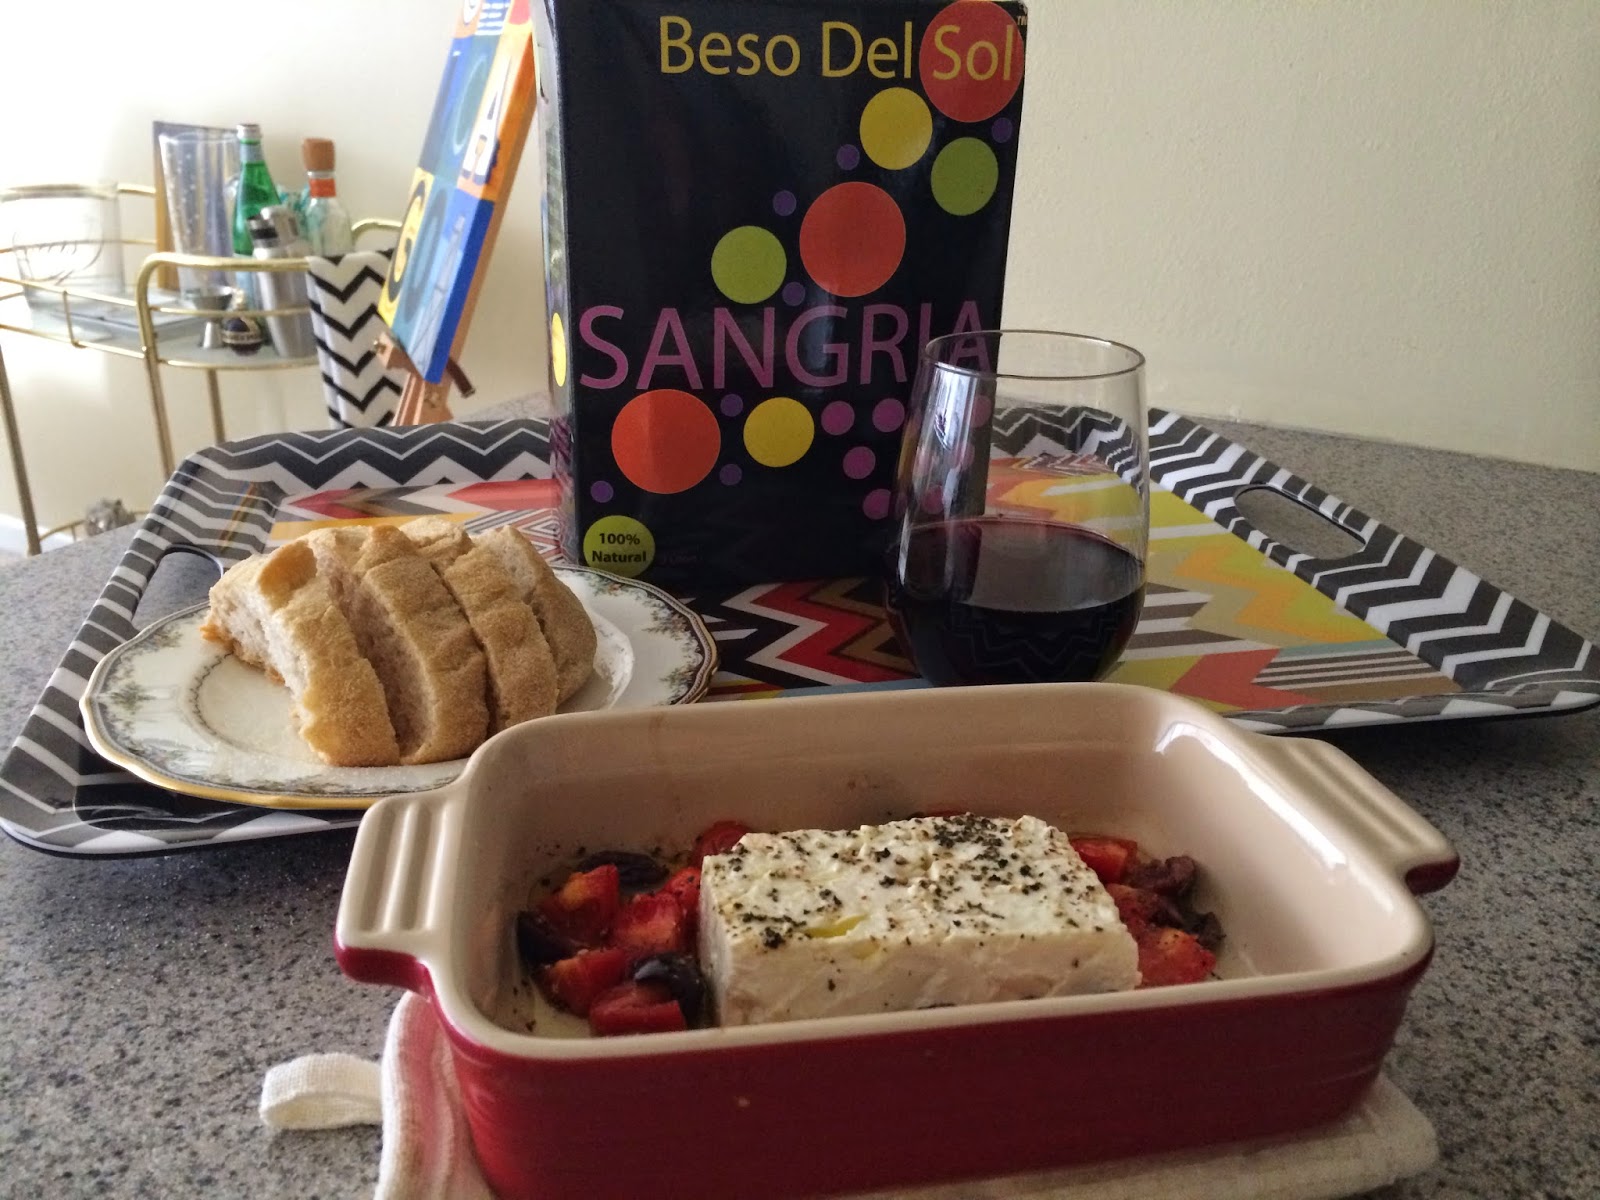 Baked Feta - Tasty Tuesday - Beso Del Sol Sangria